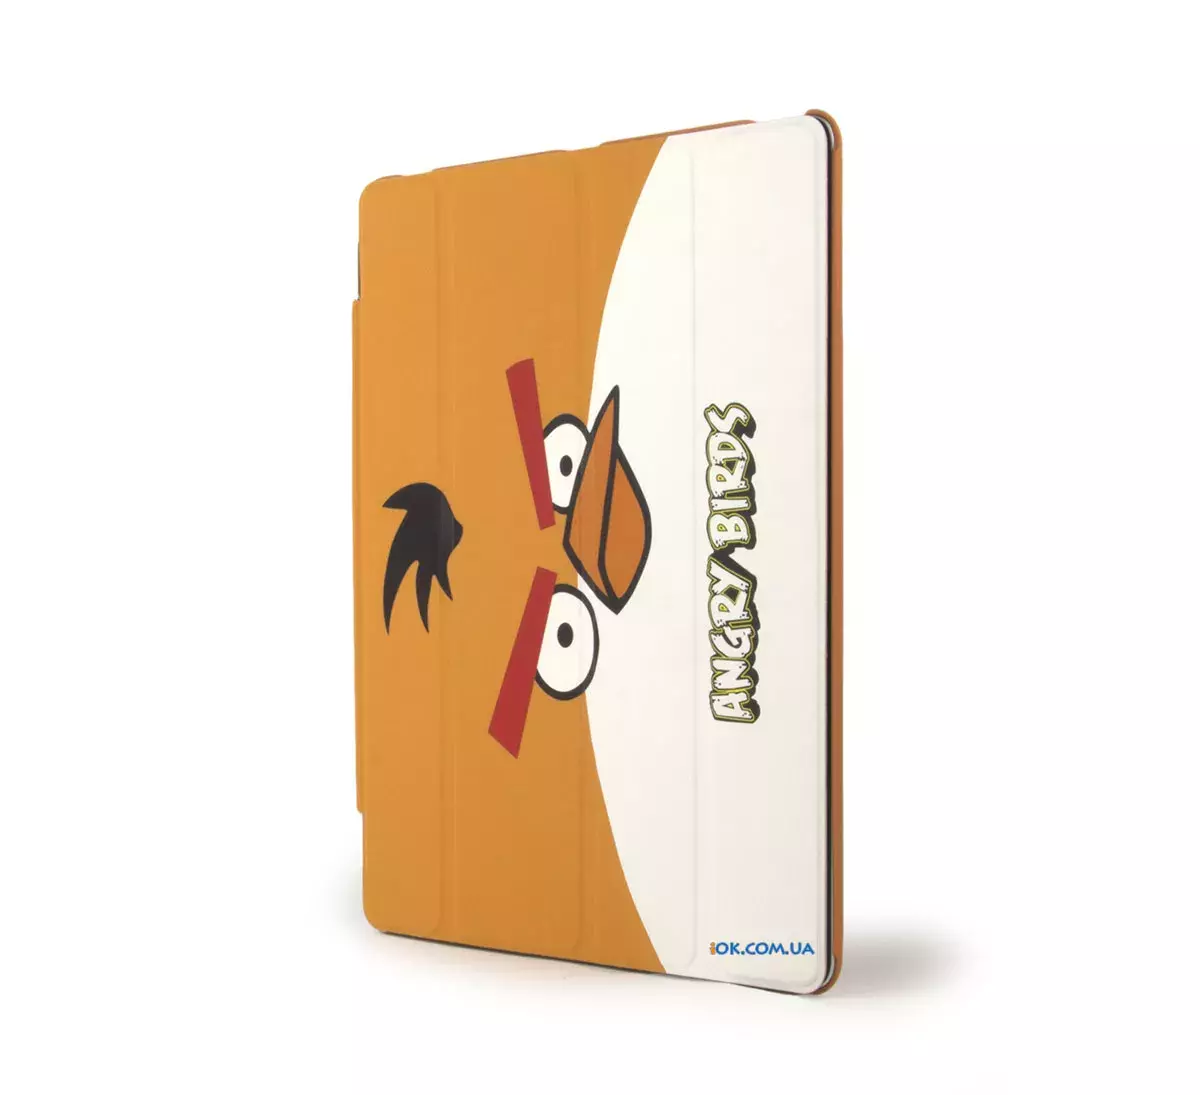 Чехол Smart Cover Angry Birds для iPad 2/3, оранжевый